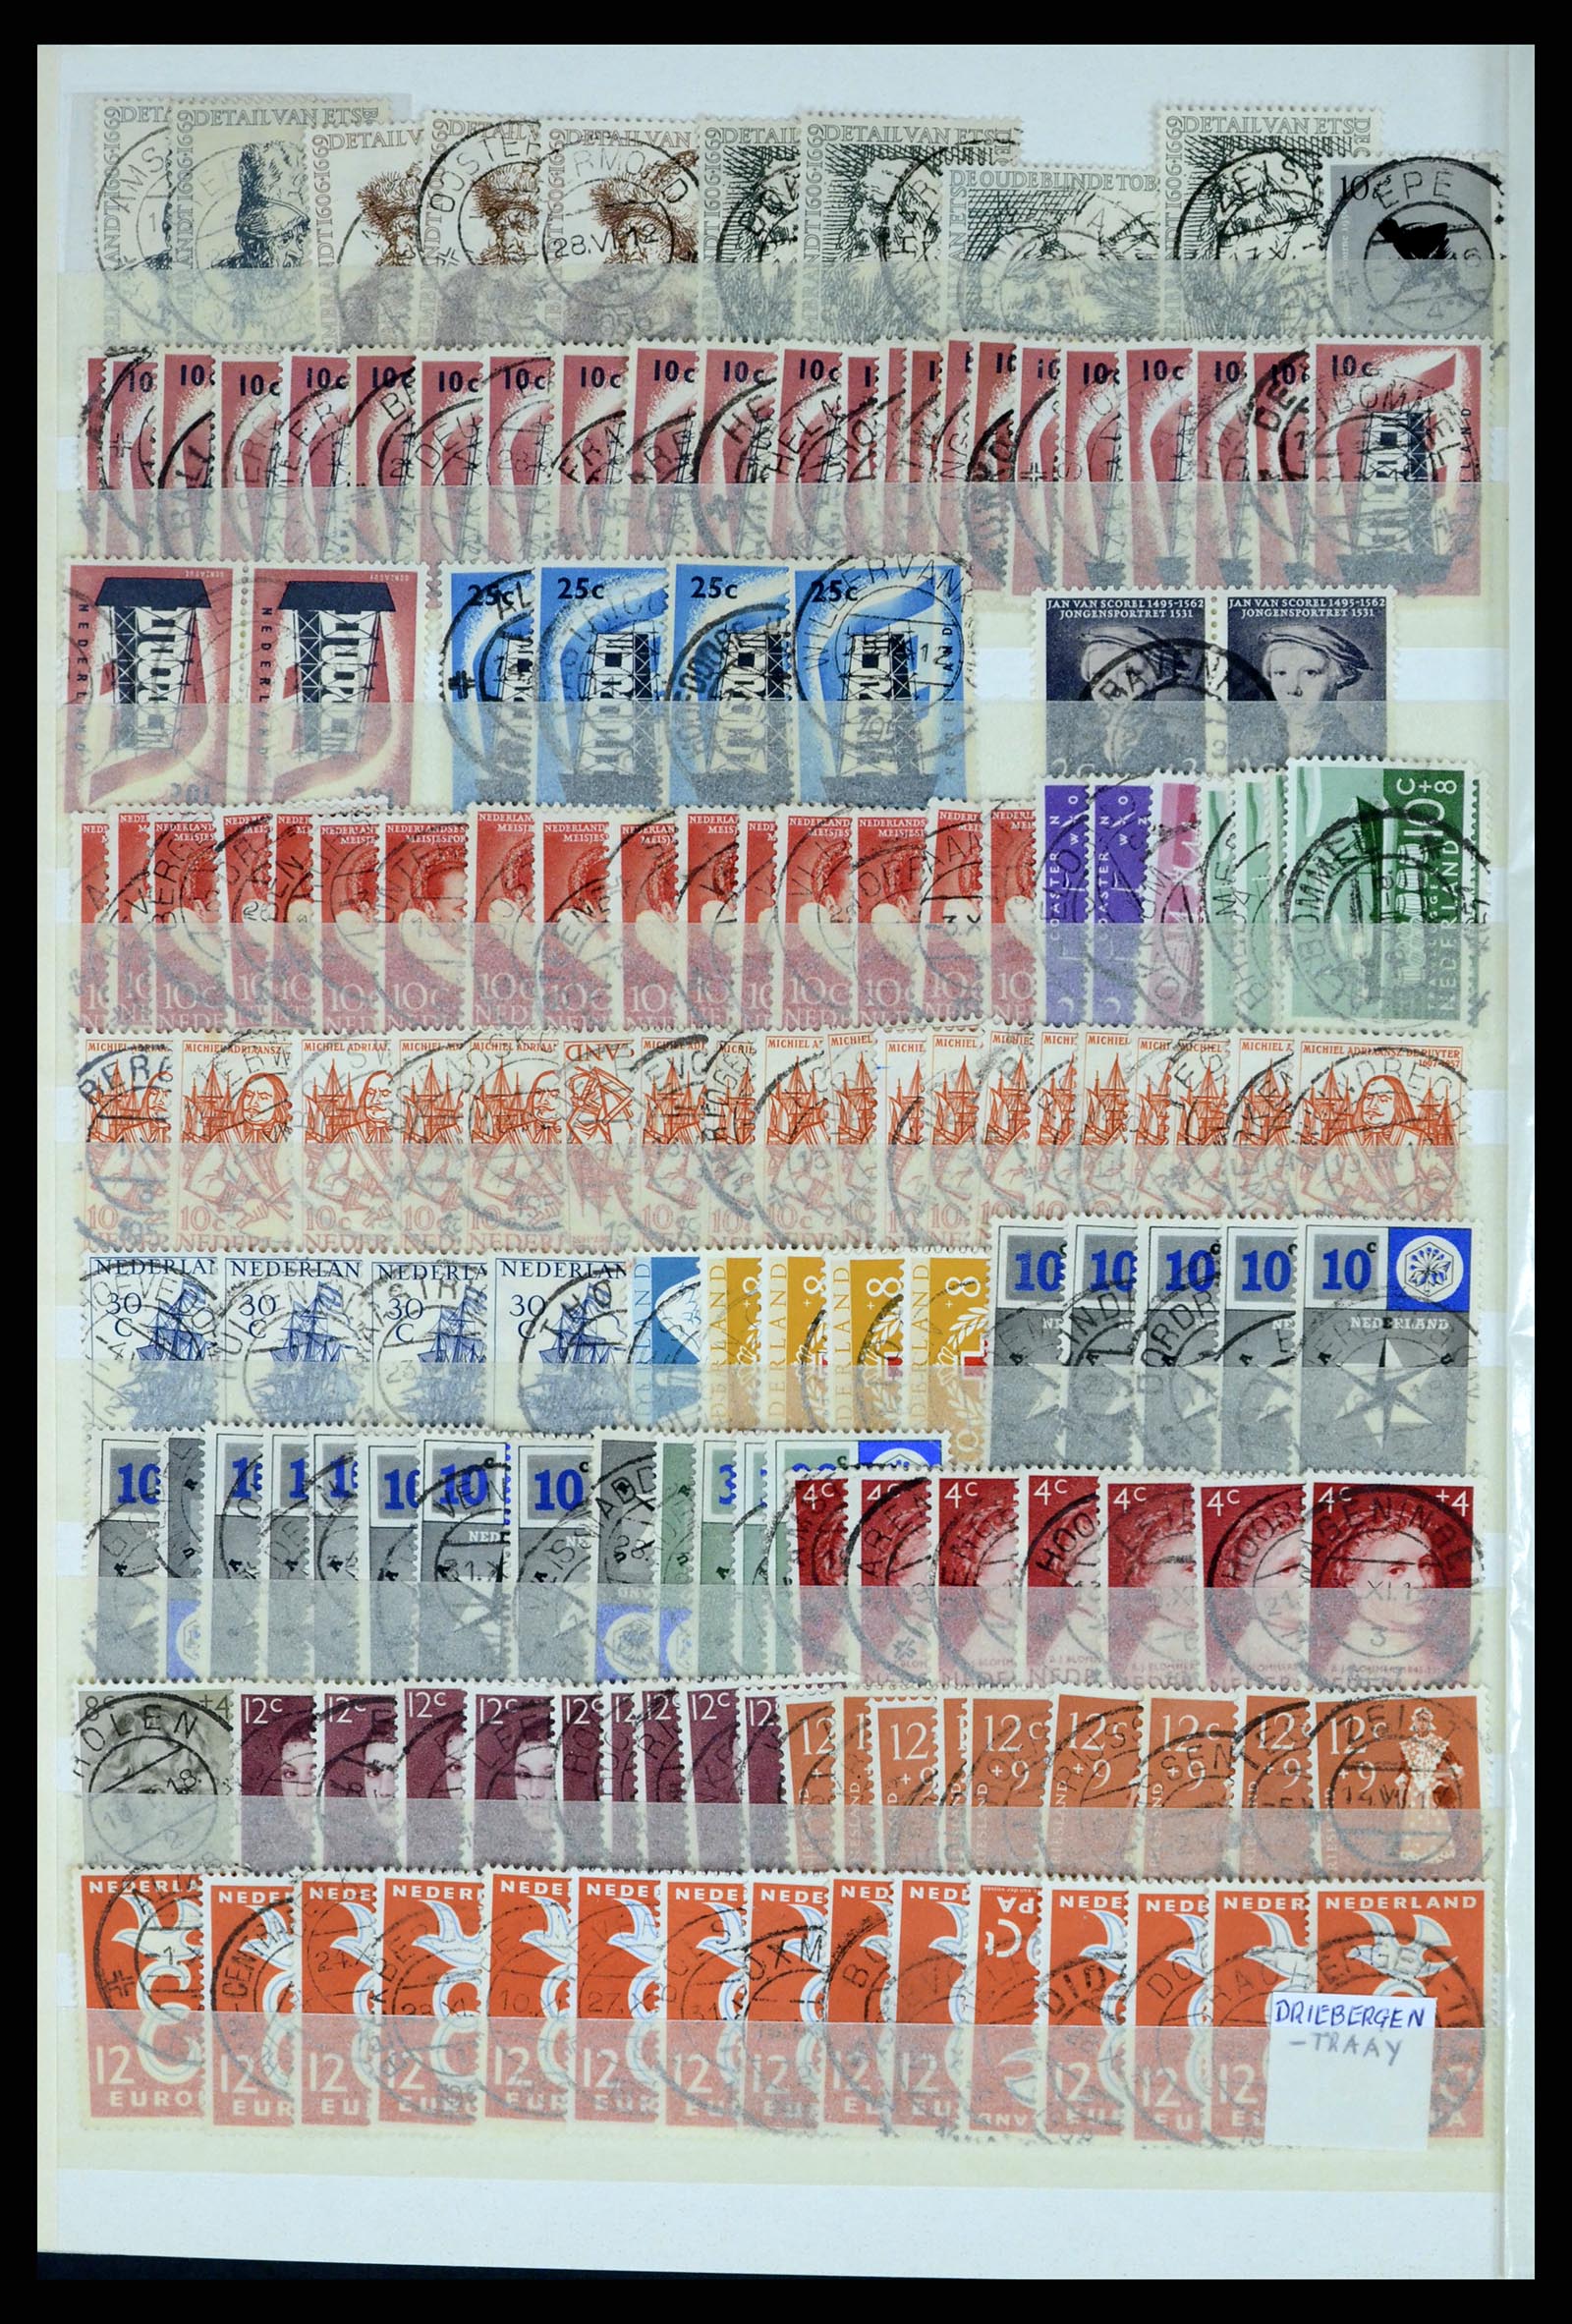 37424 052 - Stamp collection 37424 Netherlands shortbar cancels.